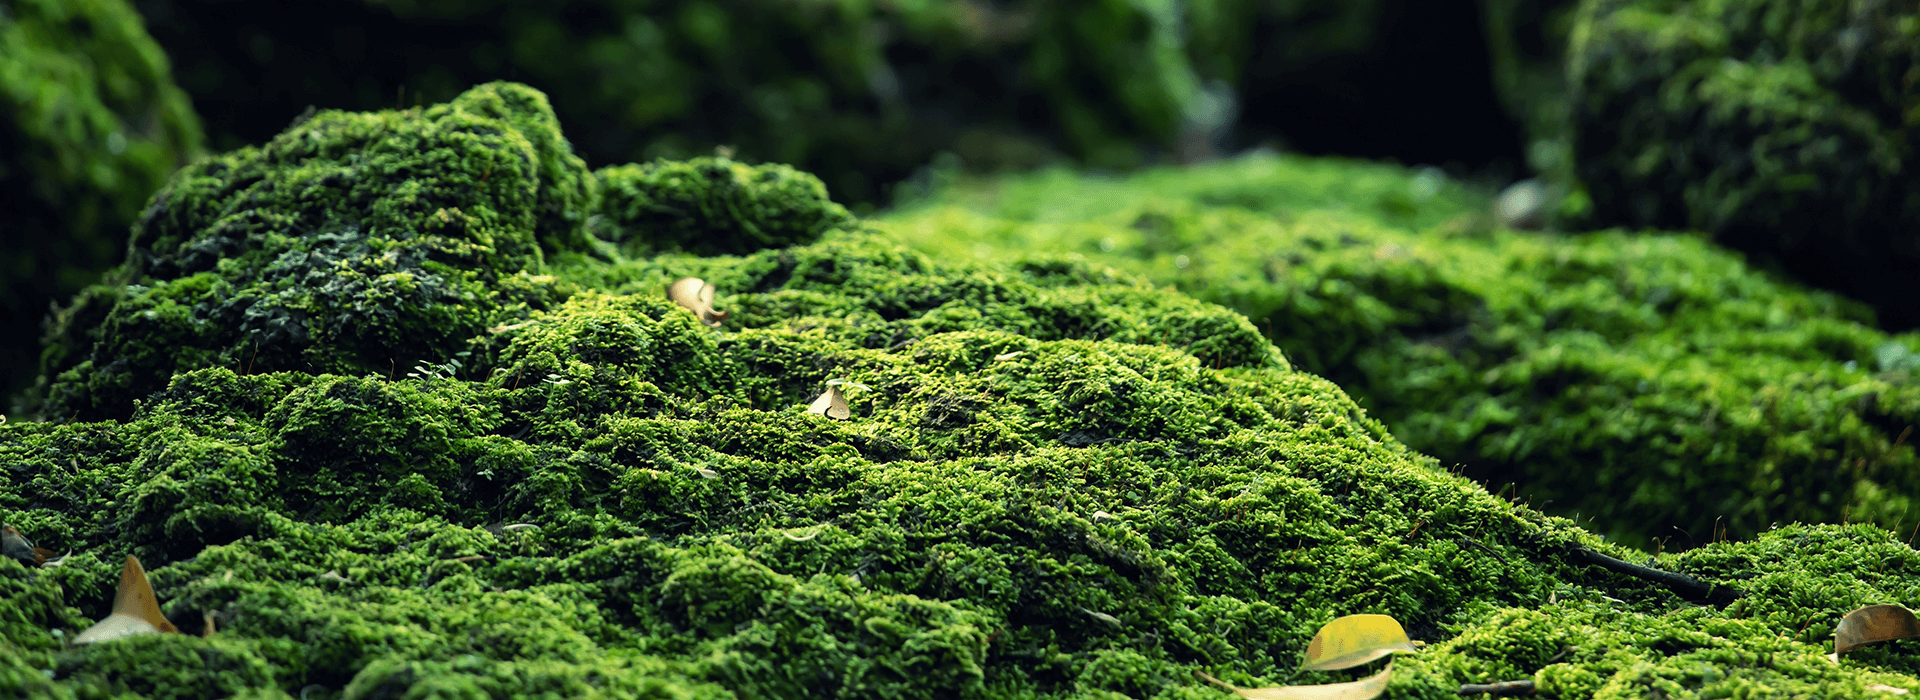 Green shrubbery